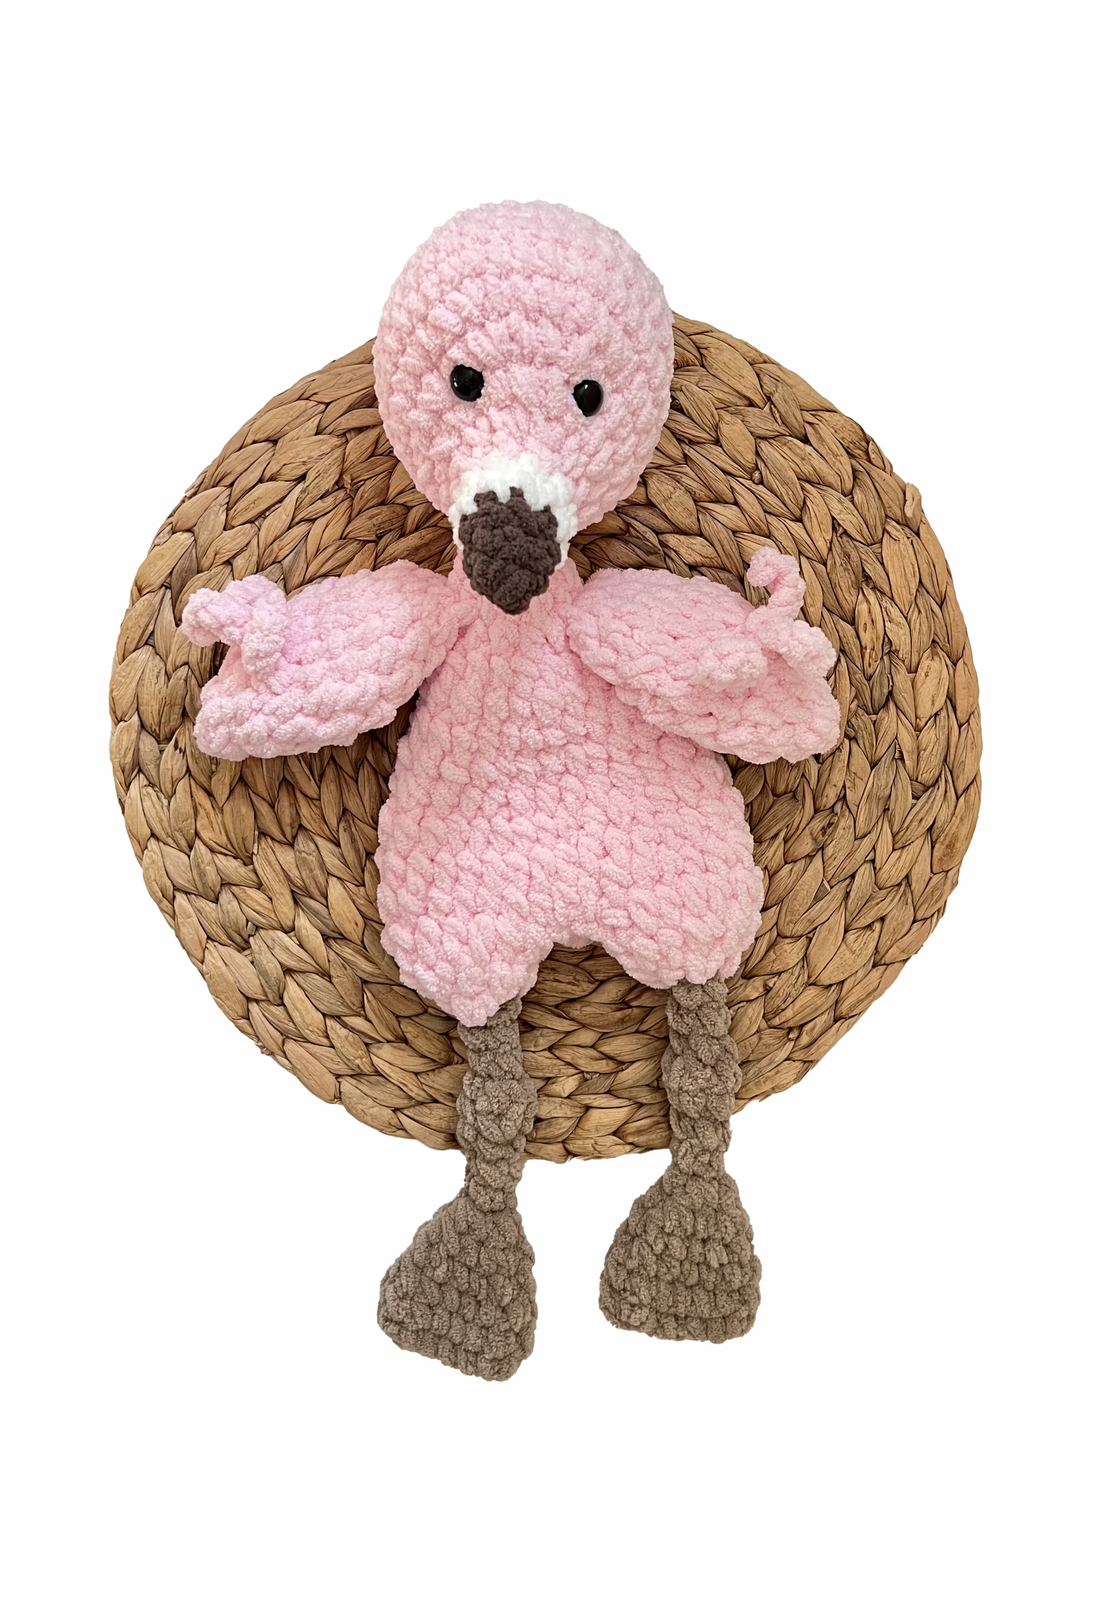 Flamingo Snuggler, Flamingo Lovey, 19” Snuggler - $45.00